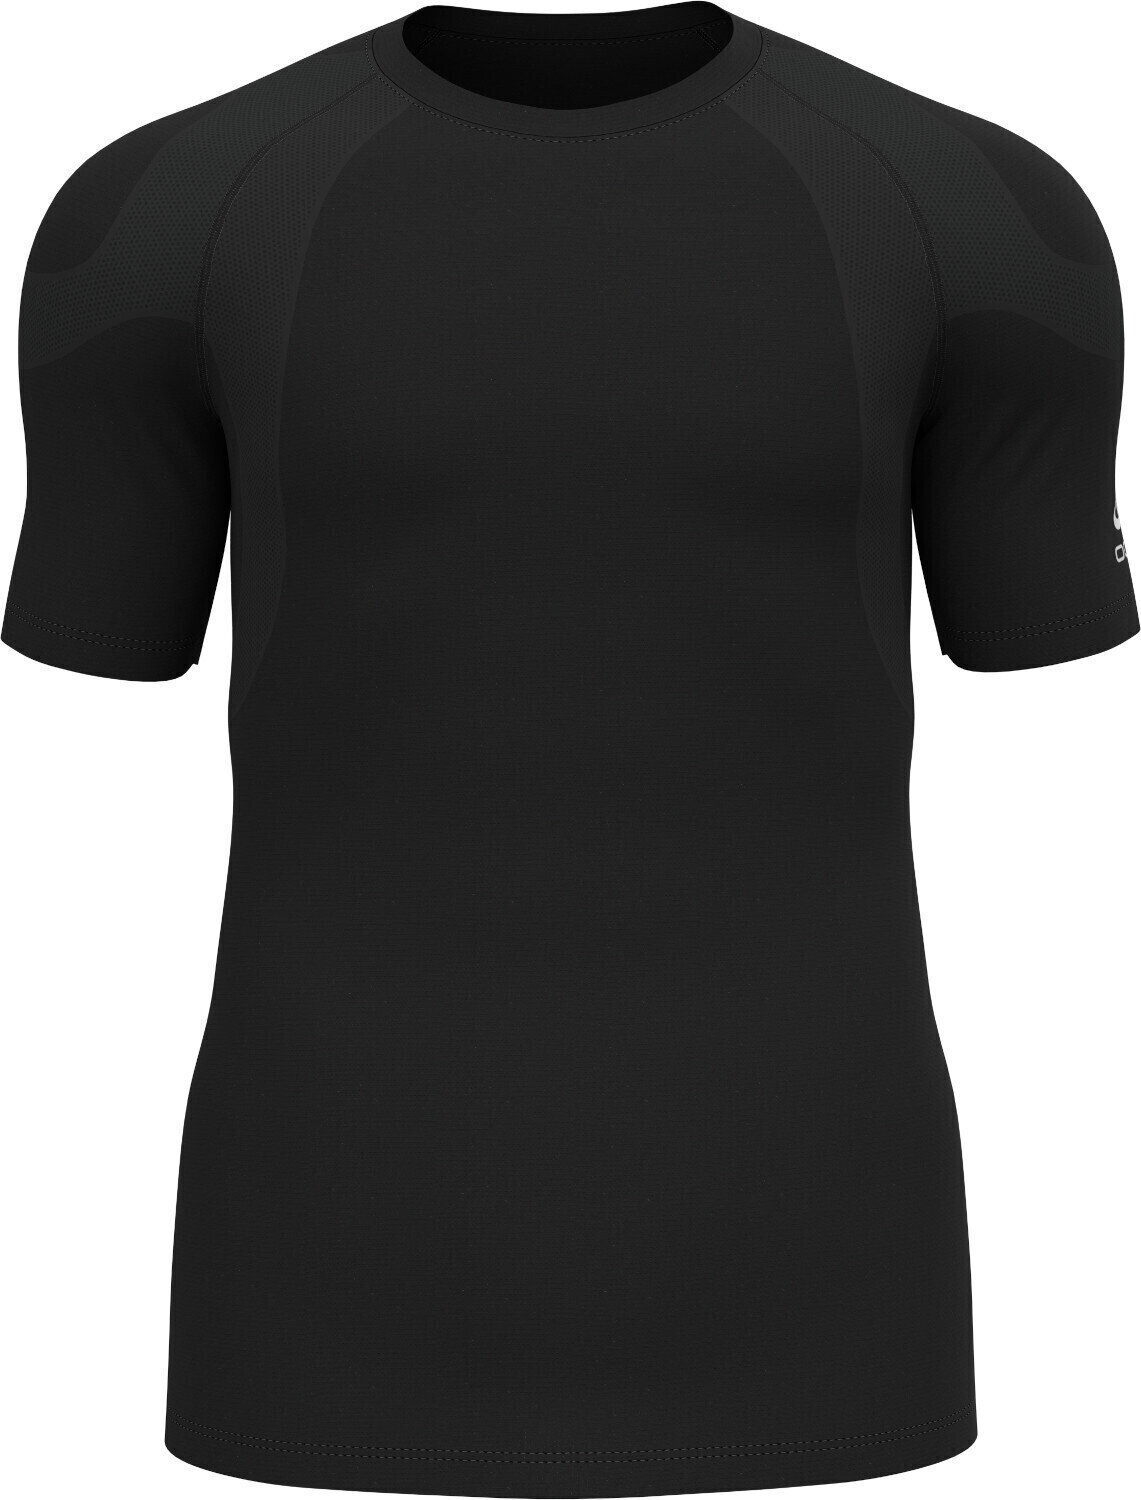 Laufshirt mit Kurzarm
 Odlo Active Spine 2.0 T-Shirt Black M Laufshirt mit Kurzarm